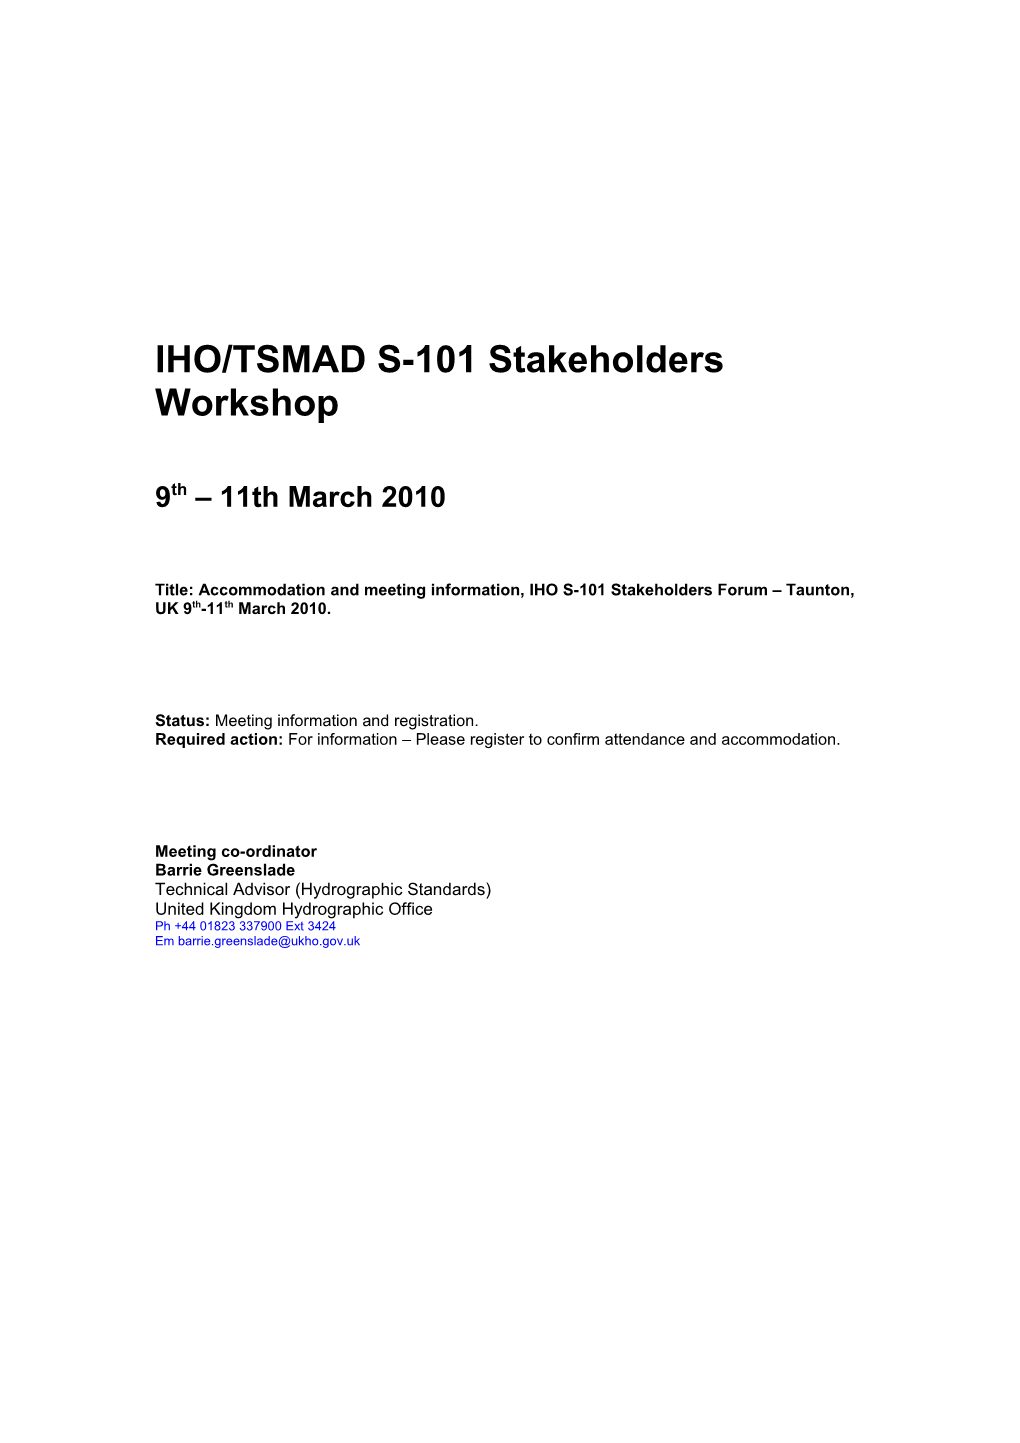 IHO/TSMAD S-101 Stakeholders Workshop